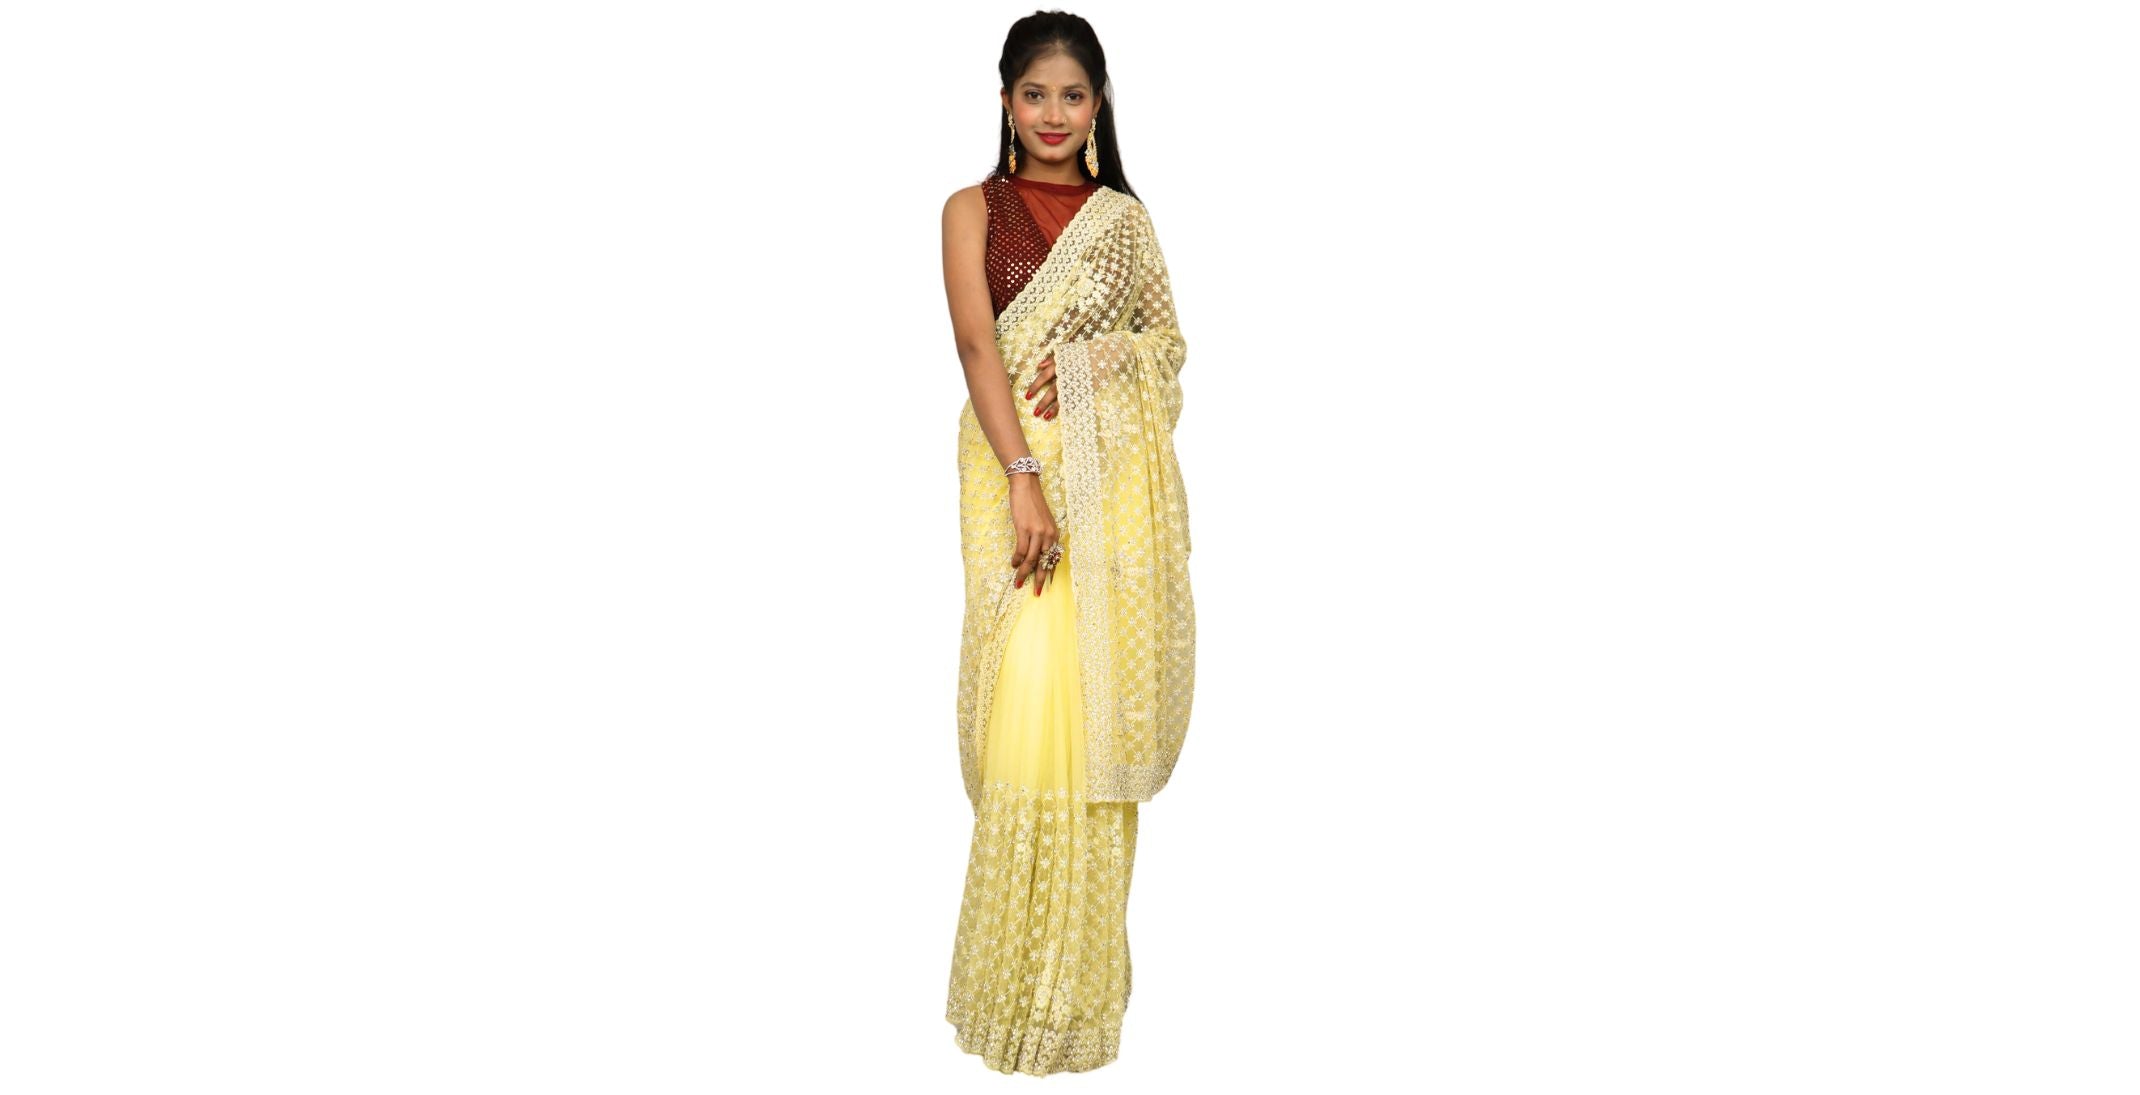  shreekama-designer-saree-effortless-elegance-latest-trends-in-ready-to-wear-sarees-for-weddings